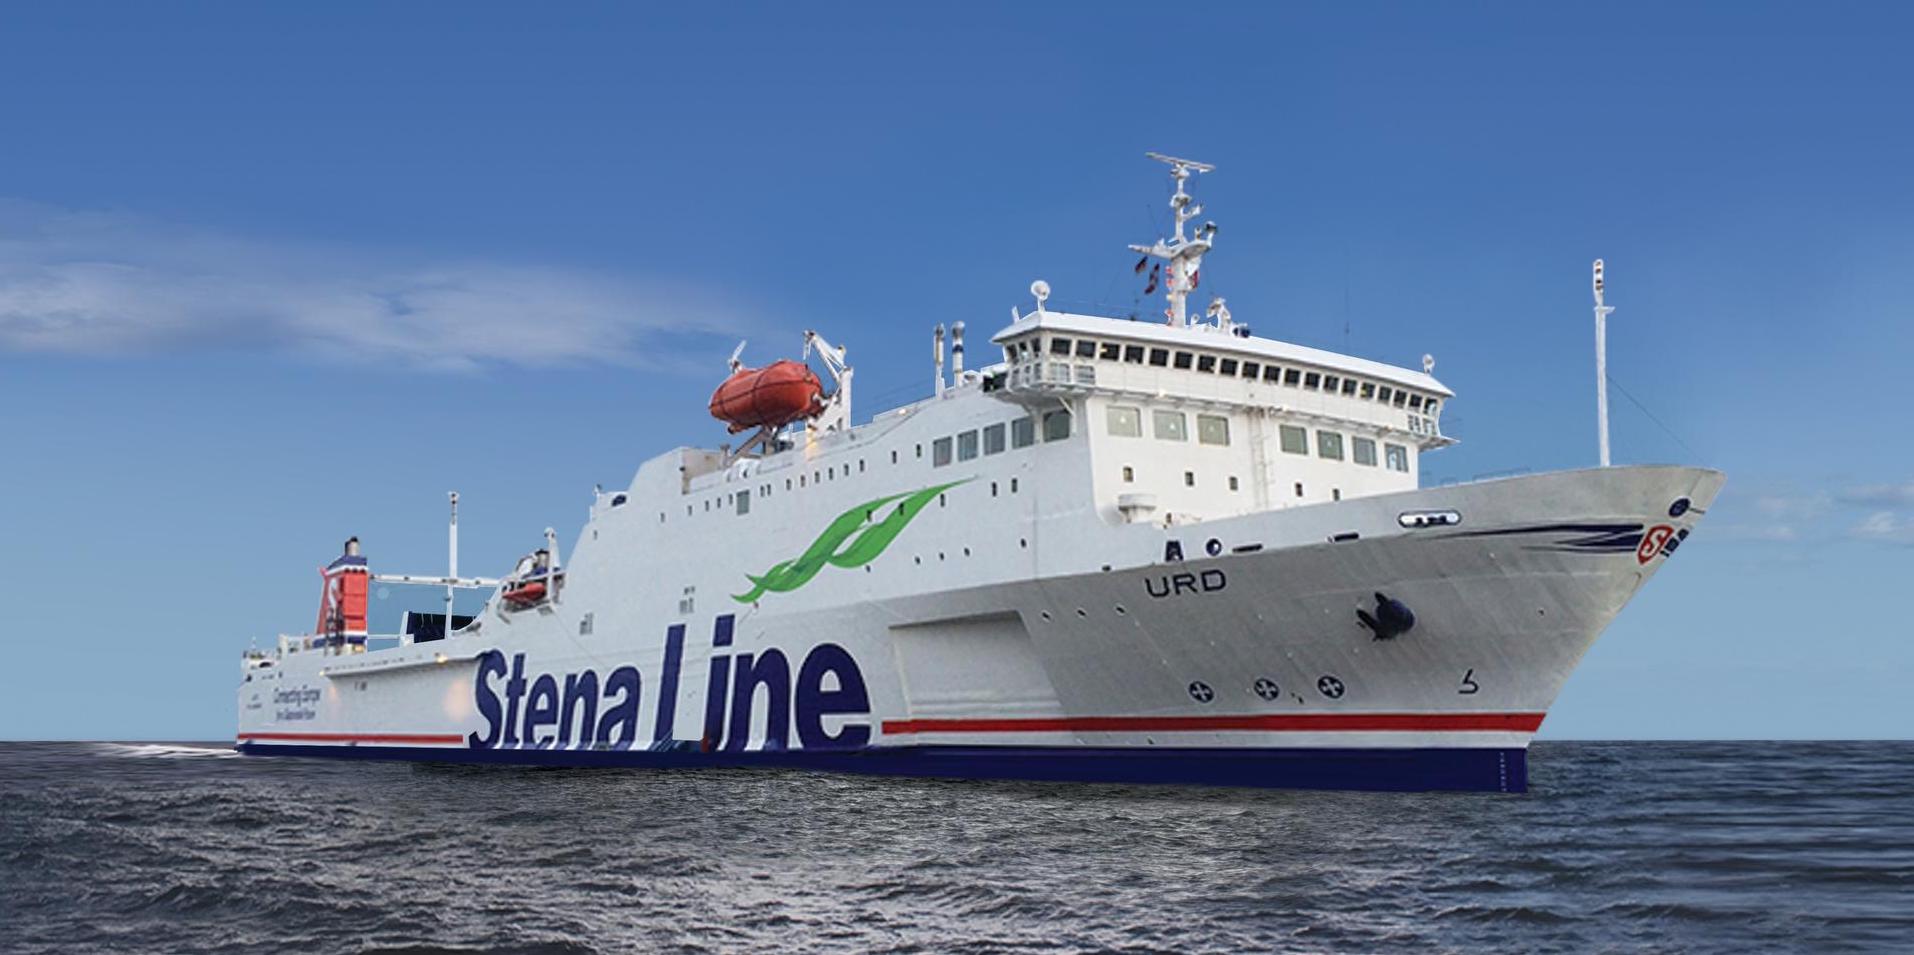 Kuva Stena Line - Urd aluksesta